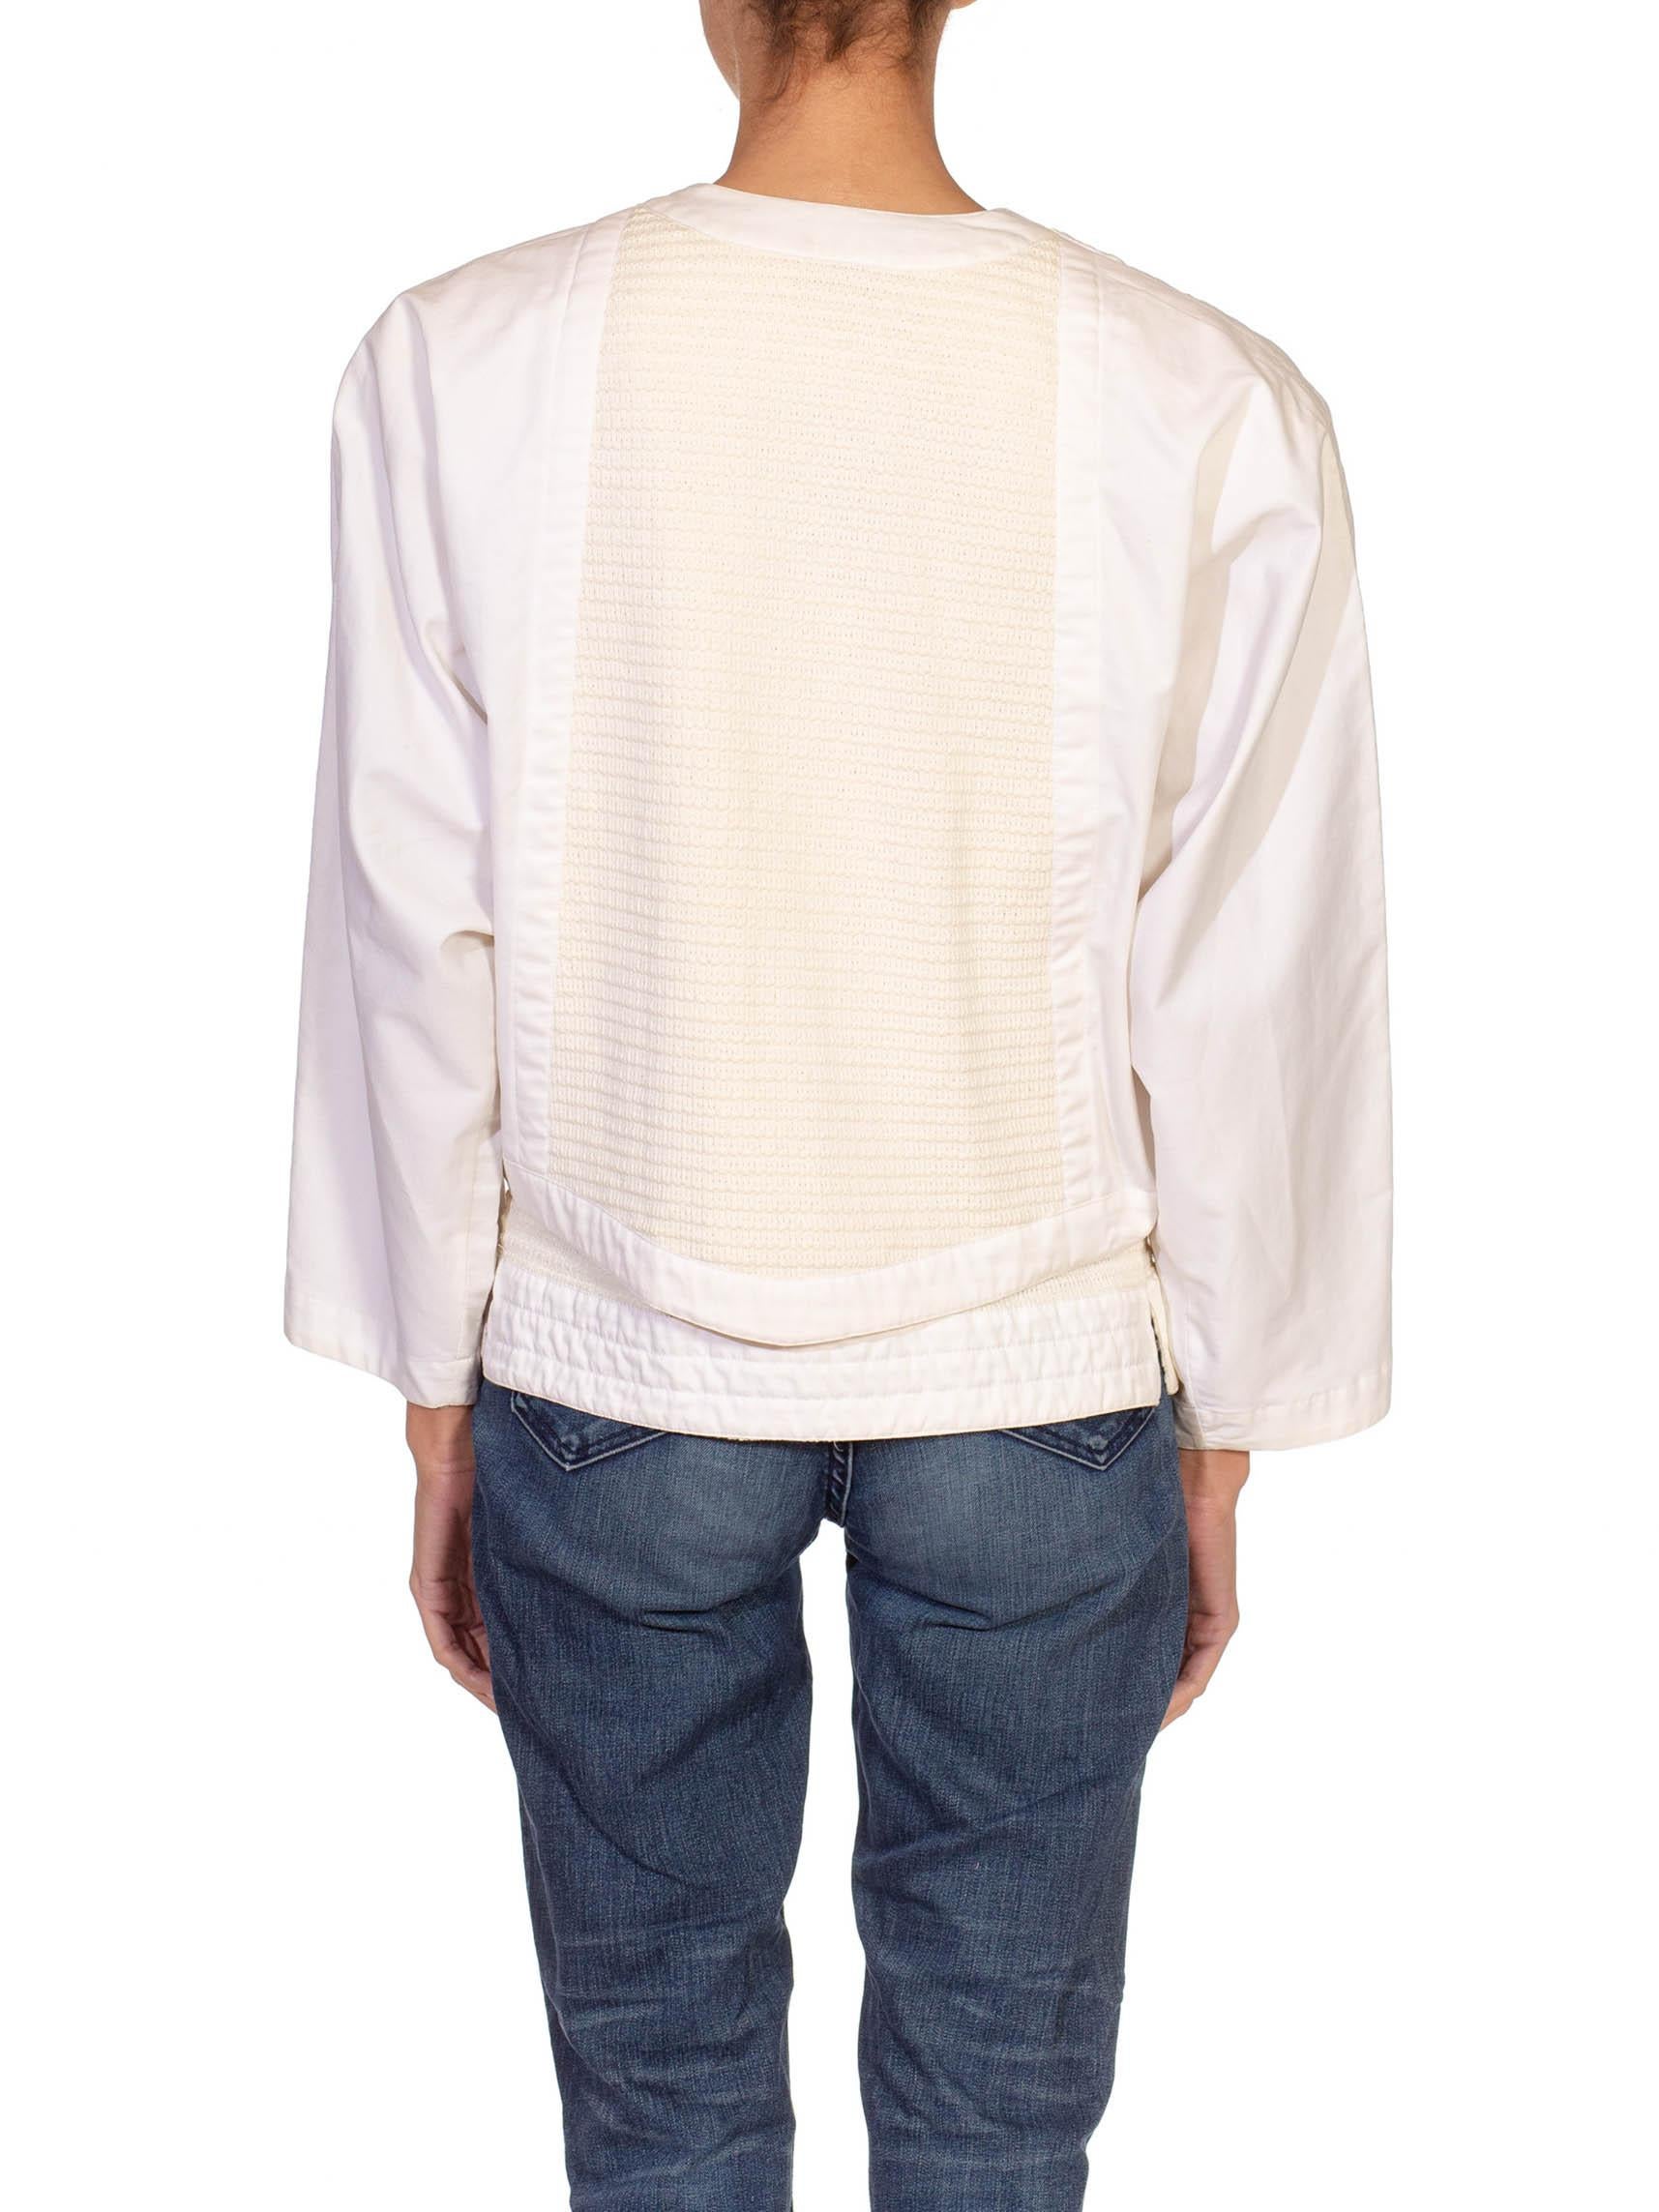 1980S Gianni Versace White Cotton Textured Top & Jacket Ensemble For Sale 4